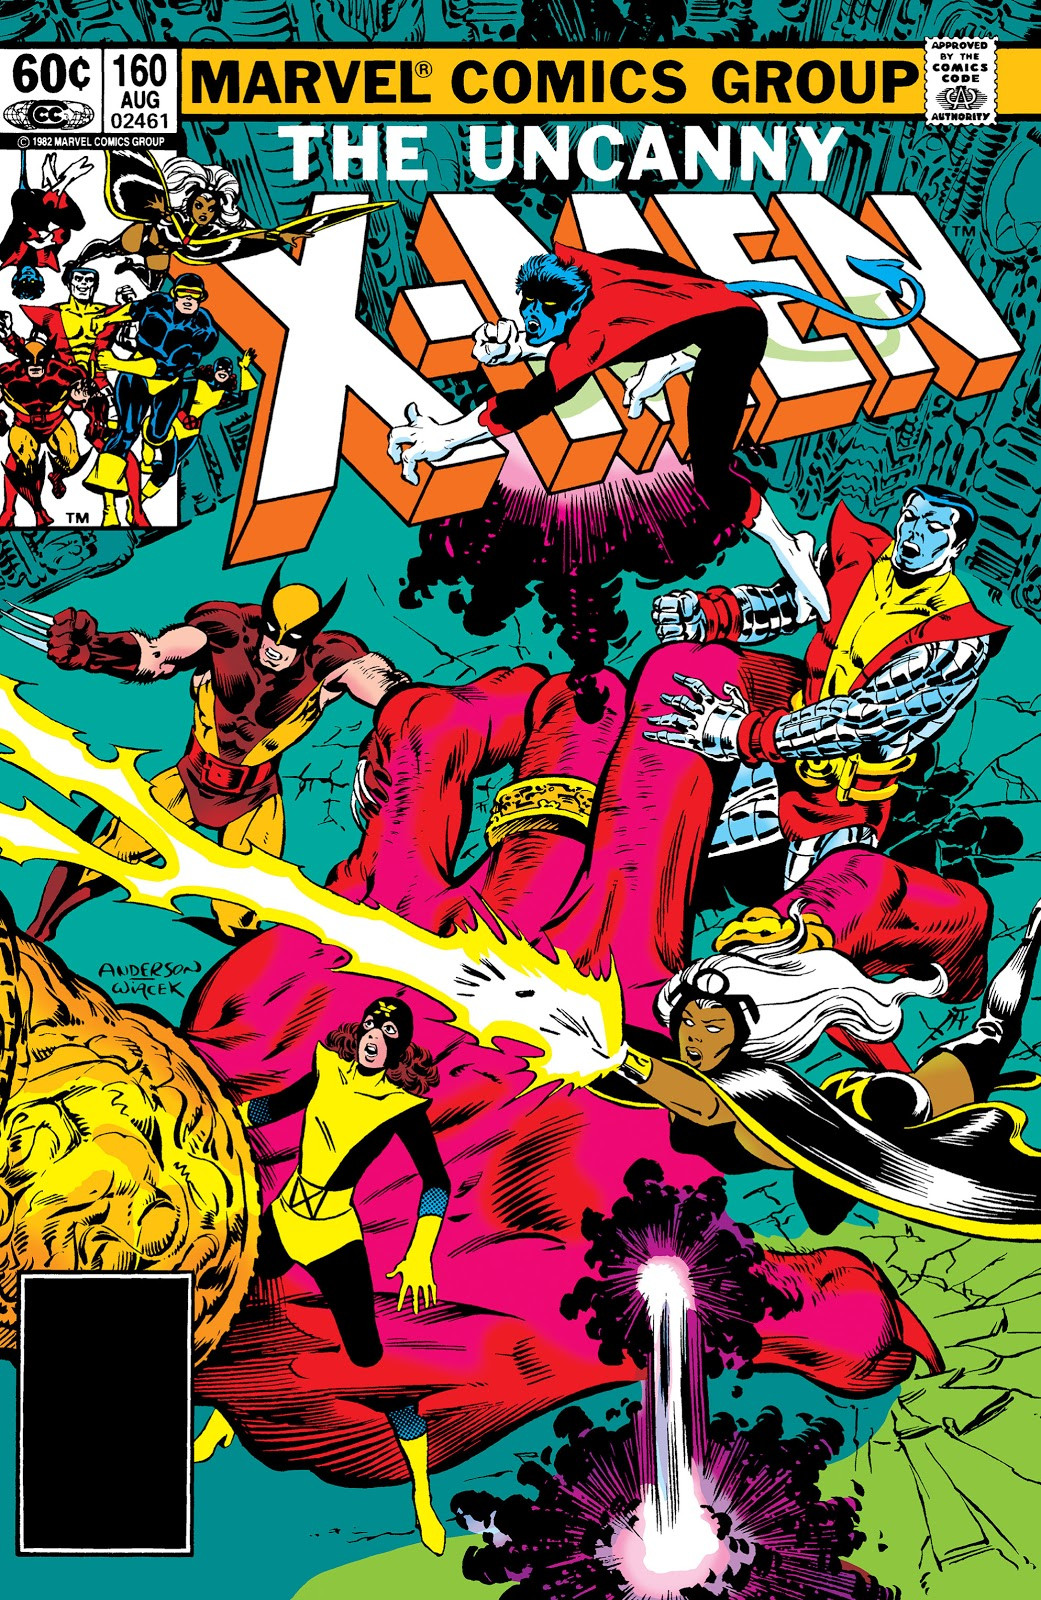 Uncanny X-Men Vol 1 160 | Marvel Database | Fandom